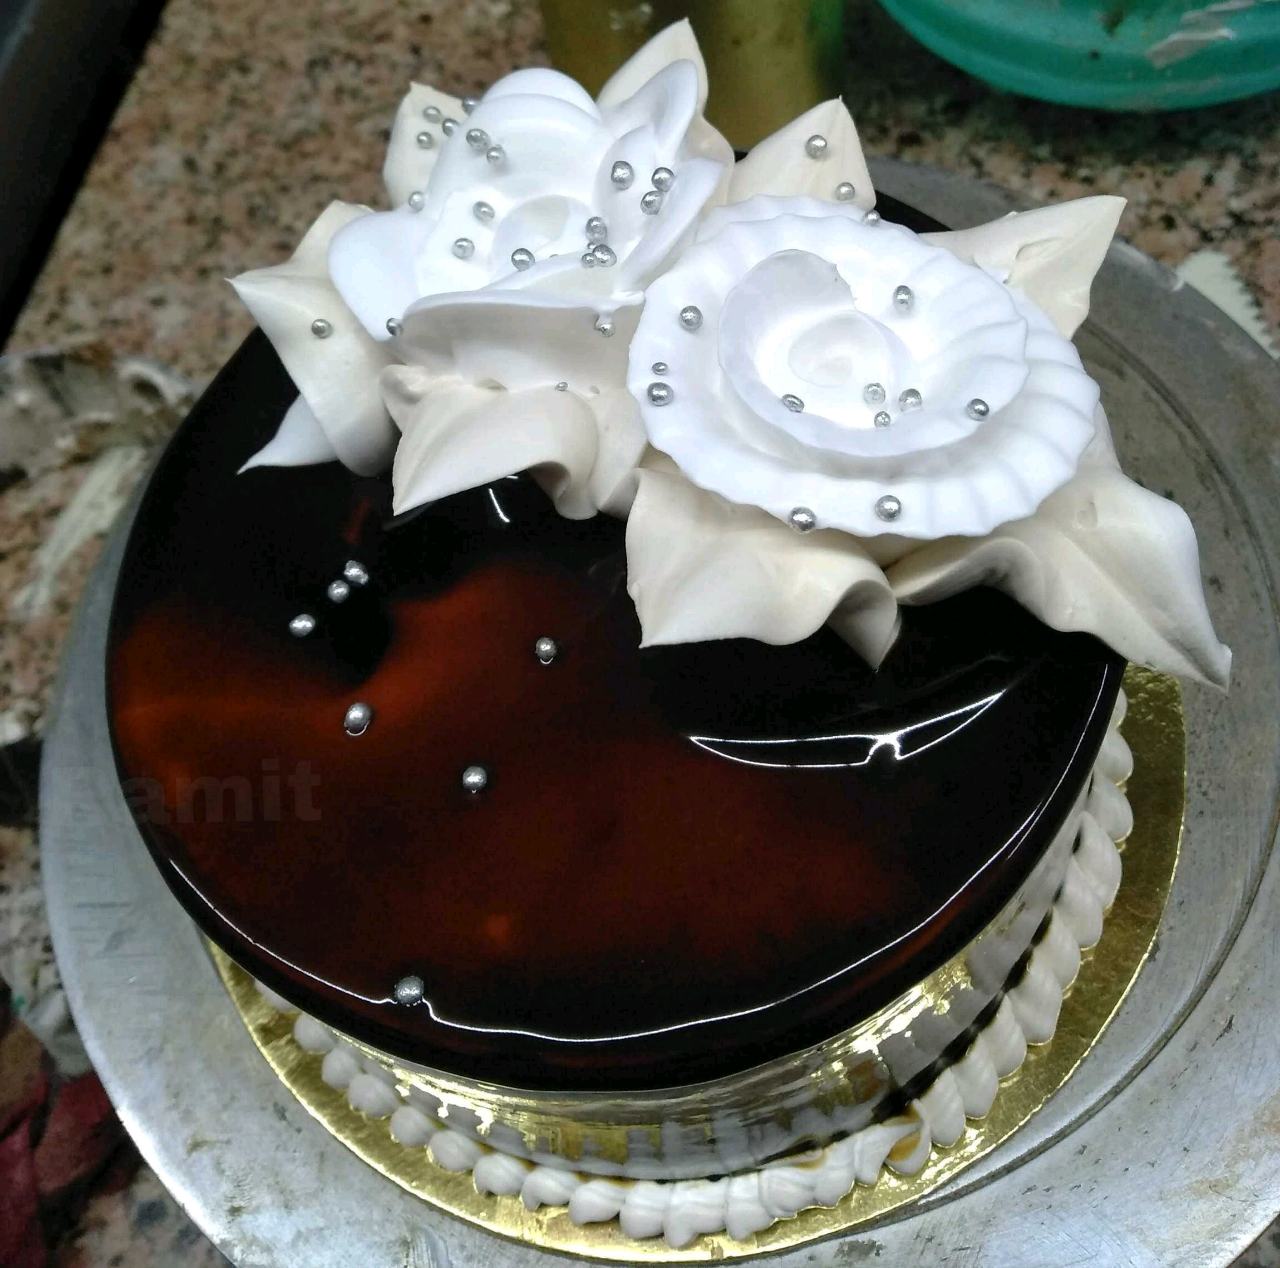 Eggless Chocolate glazed cake